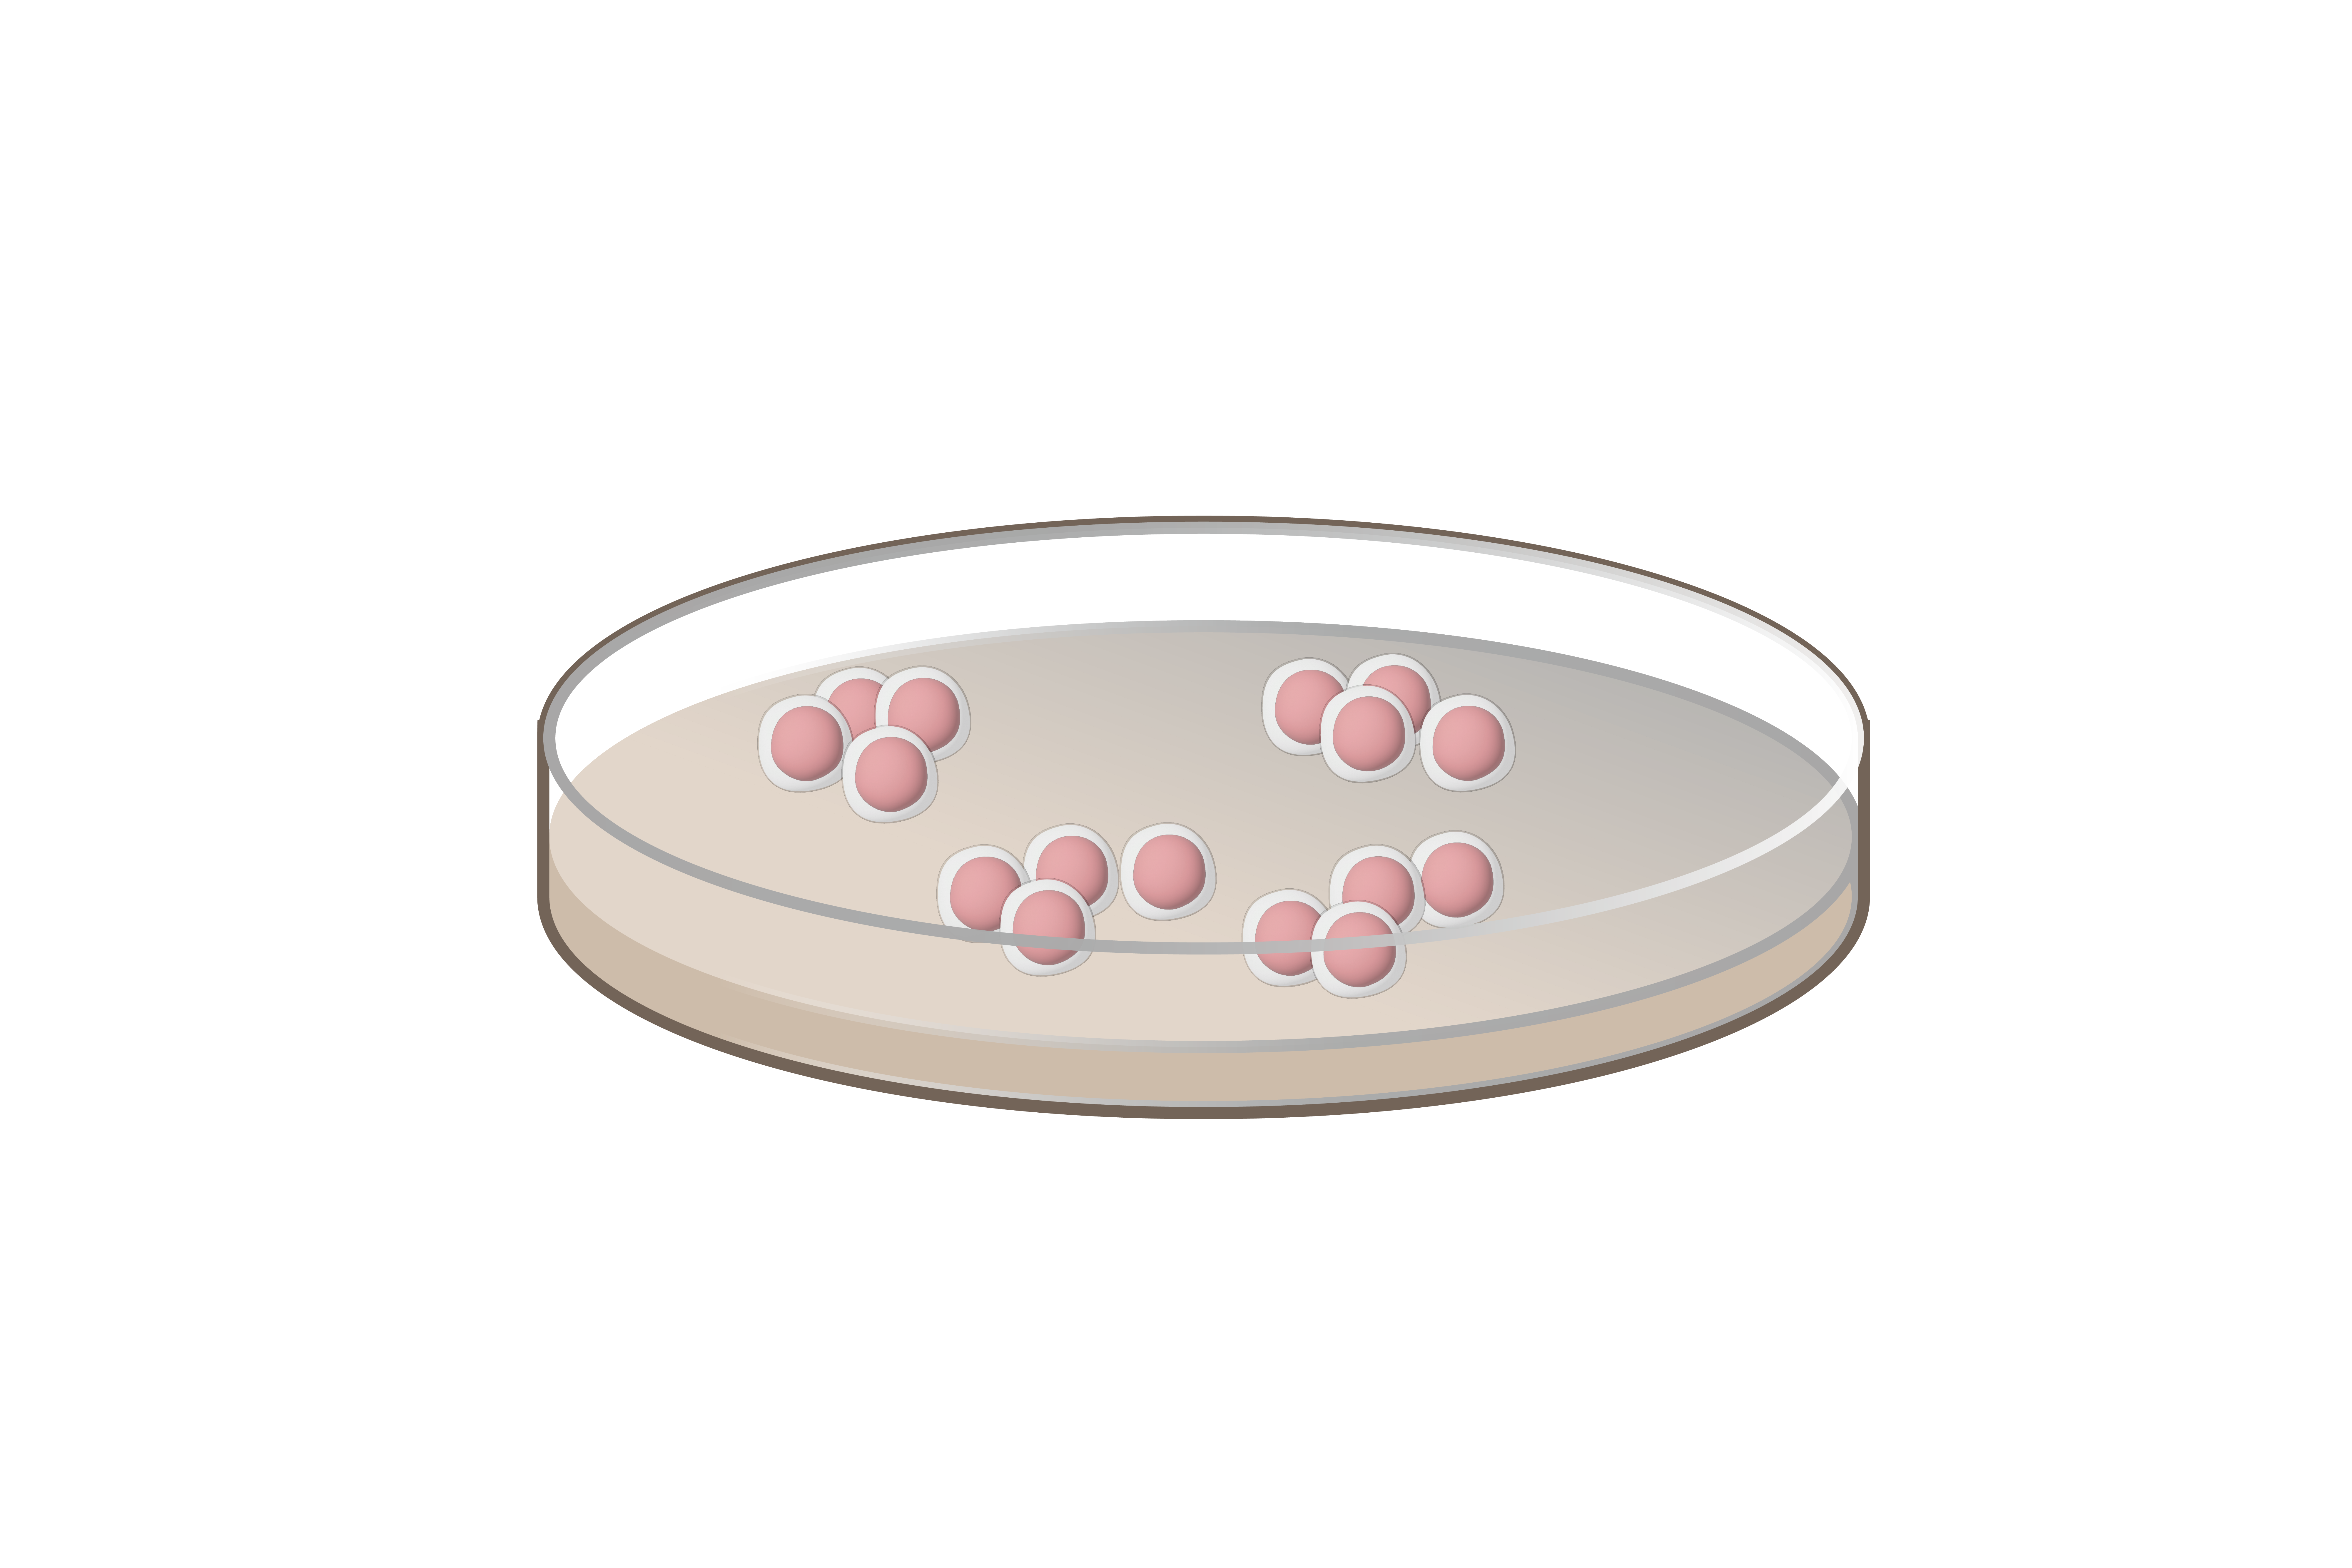 Cells in a Petri dish